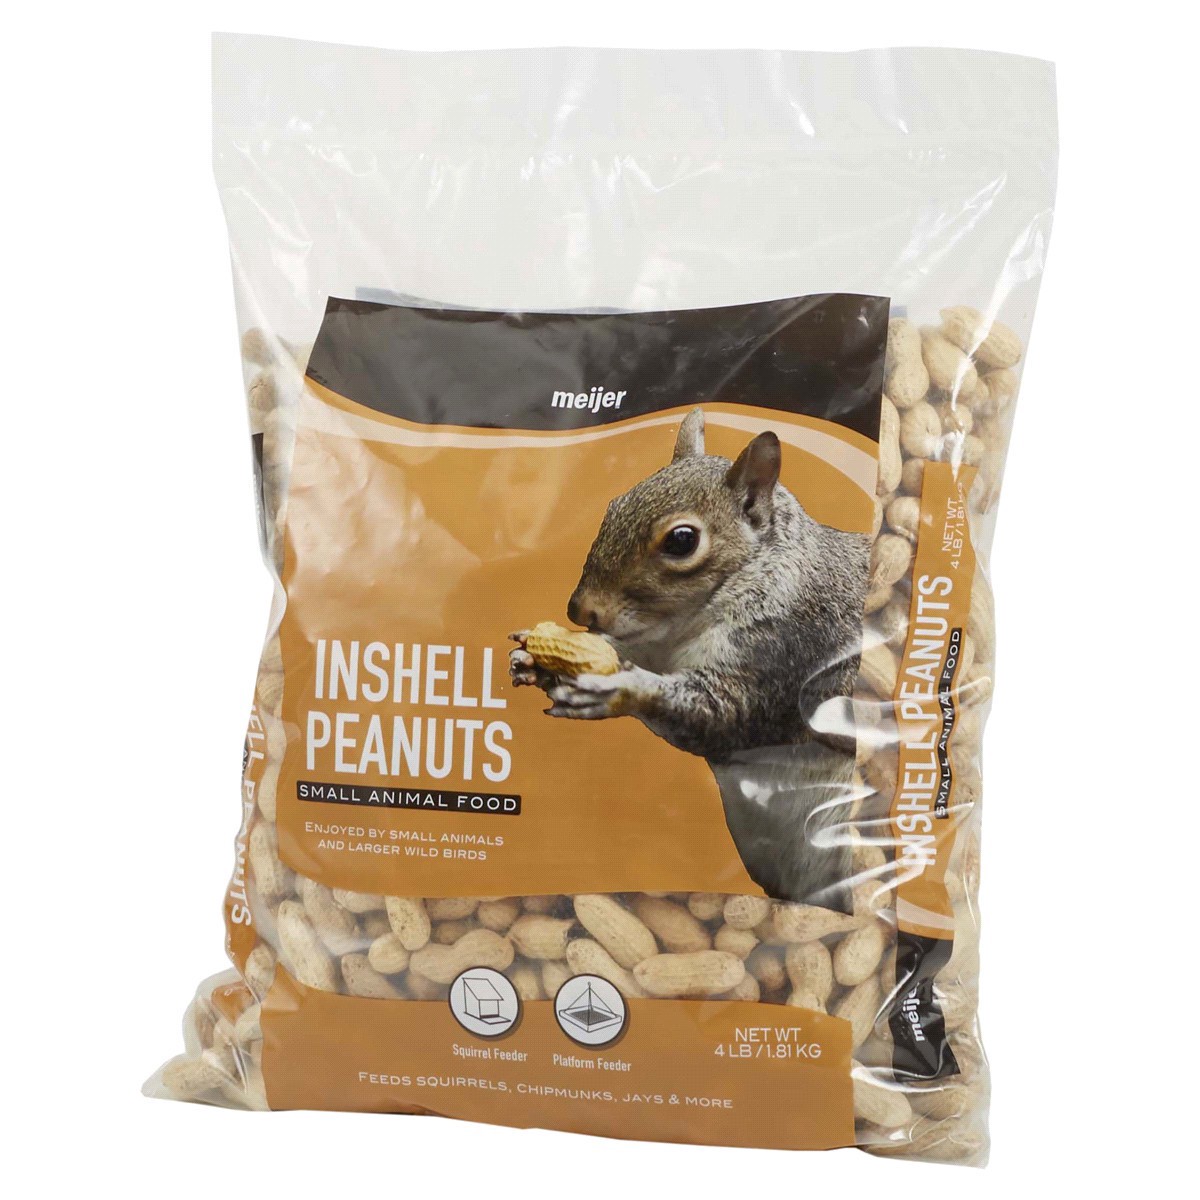 slide 9 of 29, Meijer Squirrel In Shell Peanuts, 4 lb